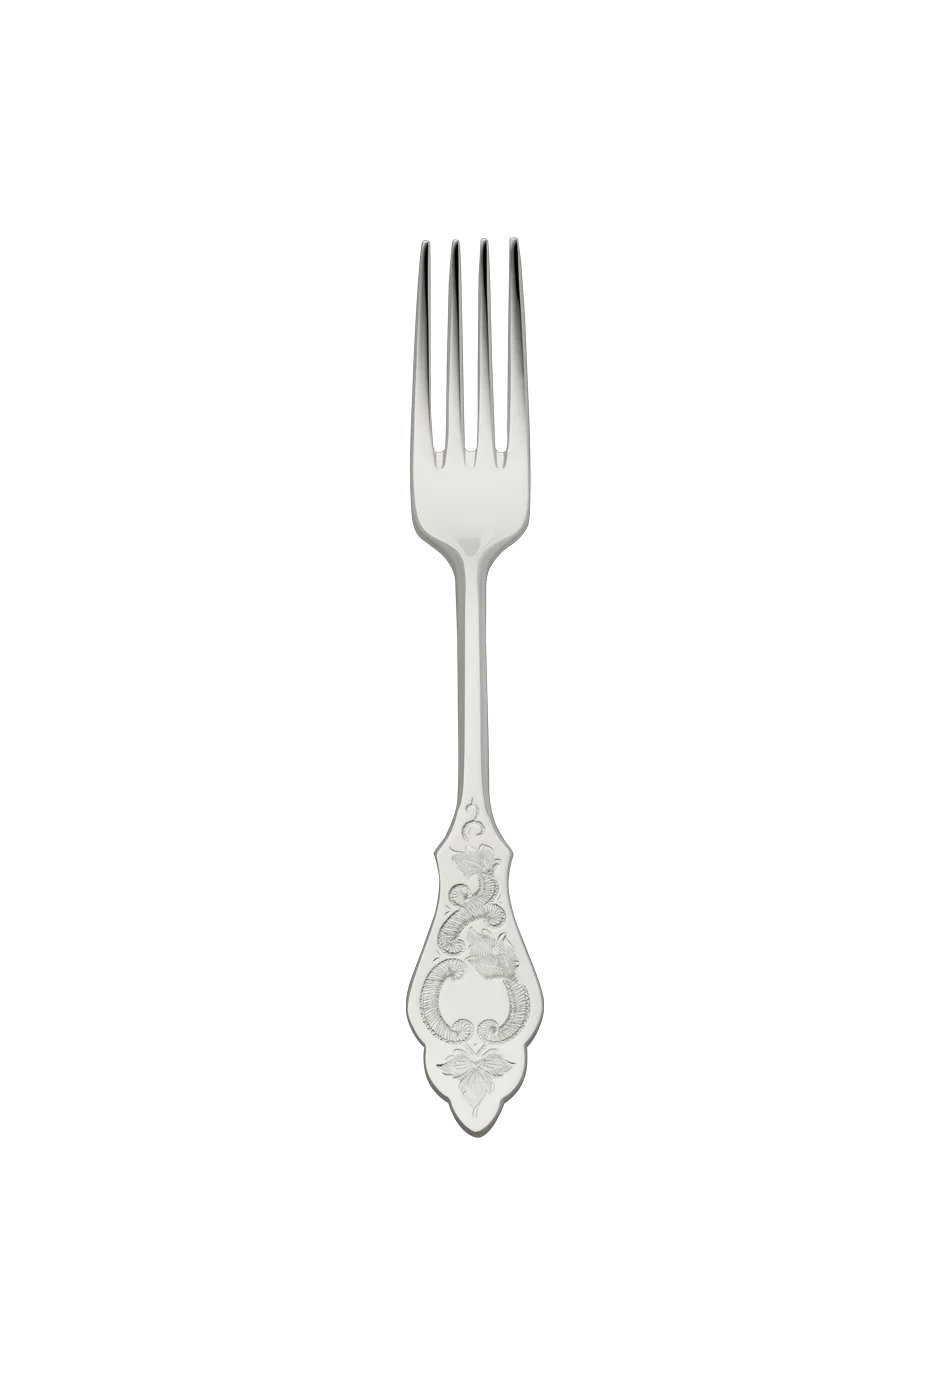 Ostfriesen Menu Fork (150g massive silverplated)